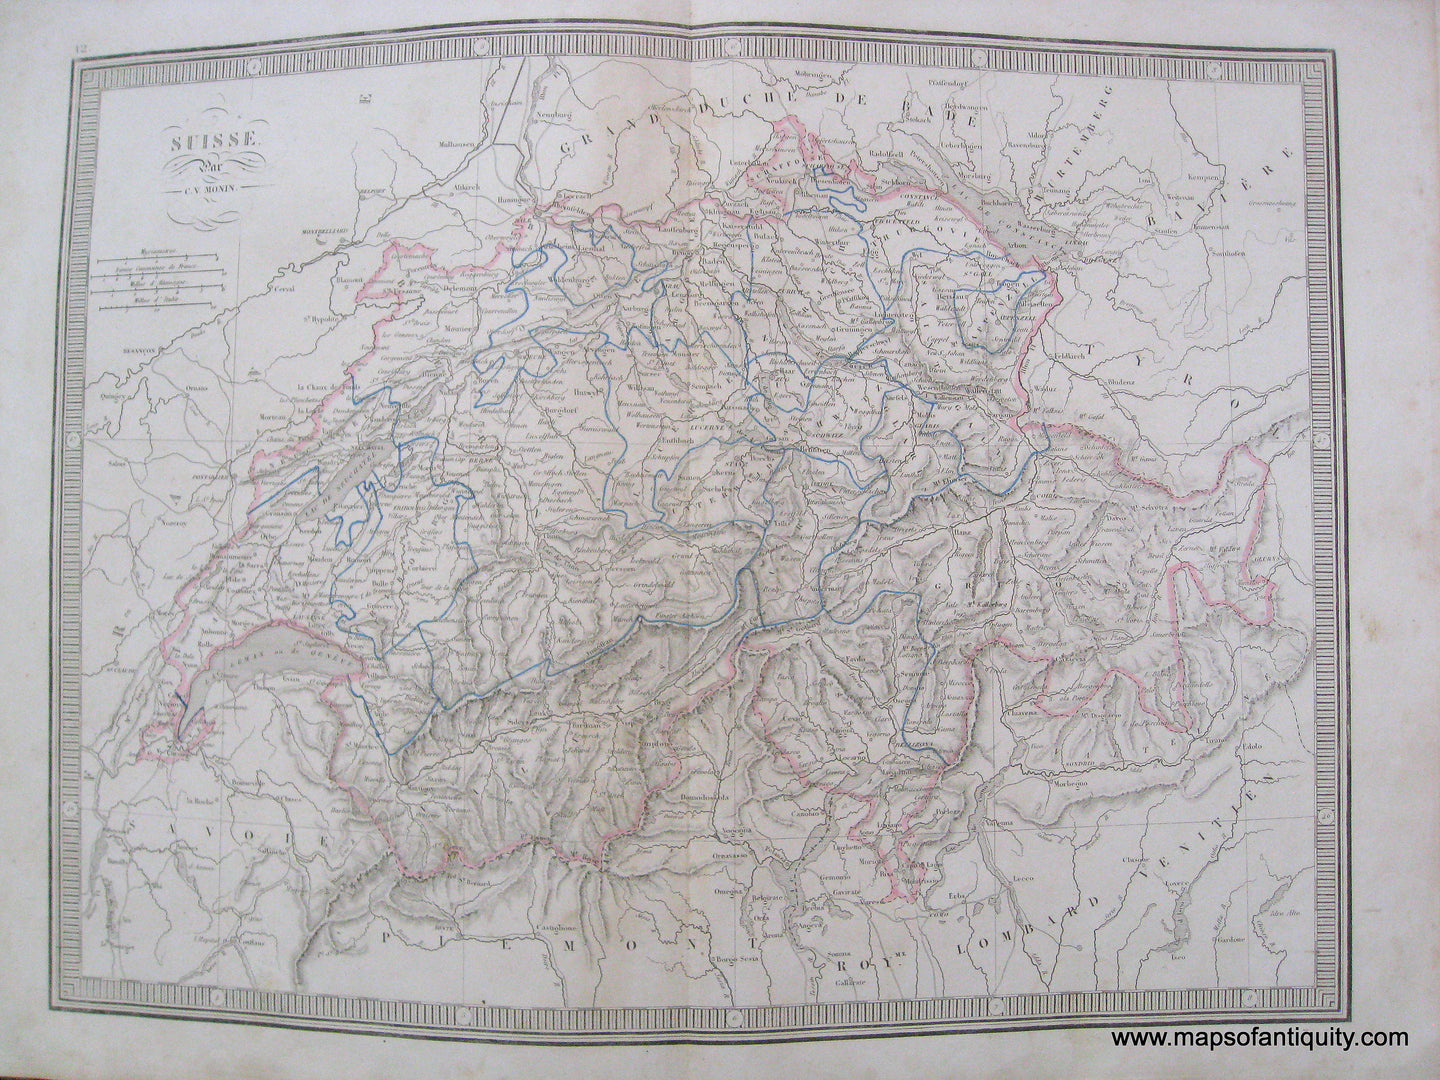 Antique-Hand-Colored-Map-Suisse-(Switzerland)-1846-Monin-1800s-19th-century-Maps-of-Antiquity